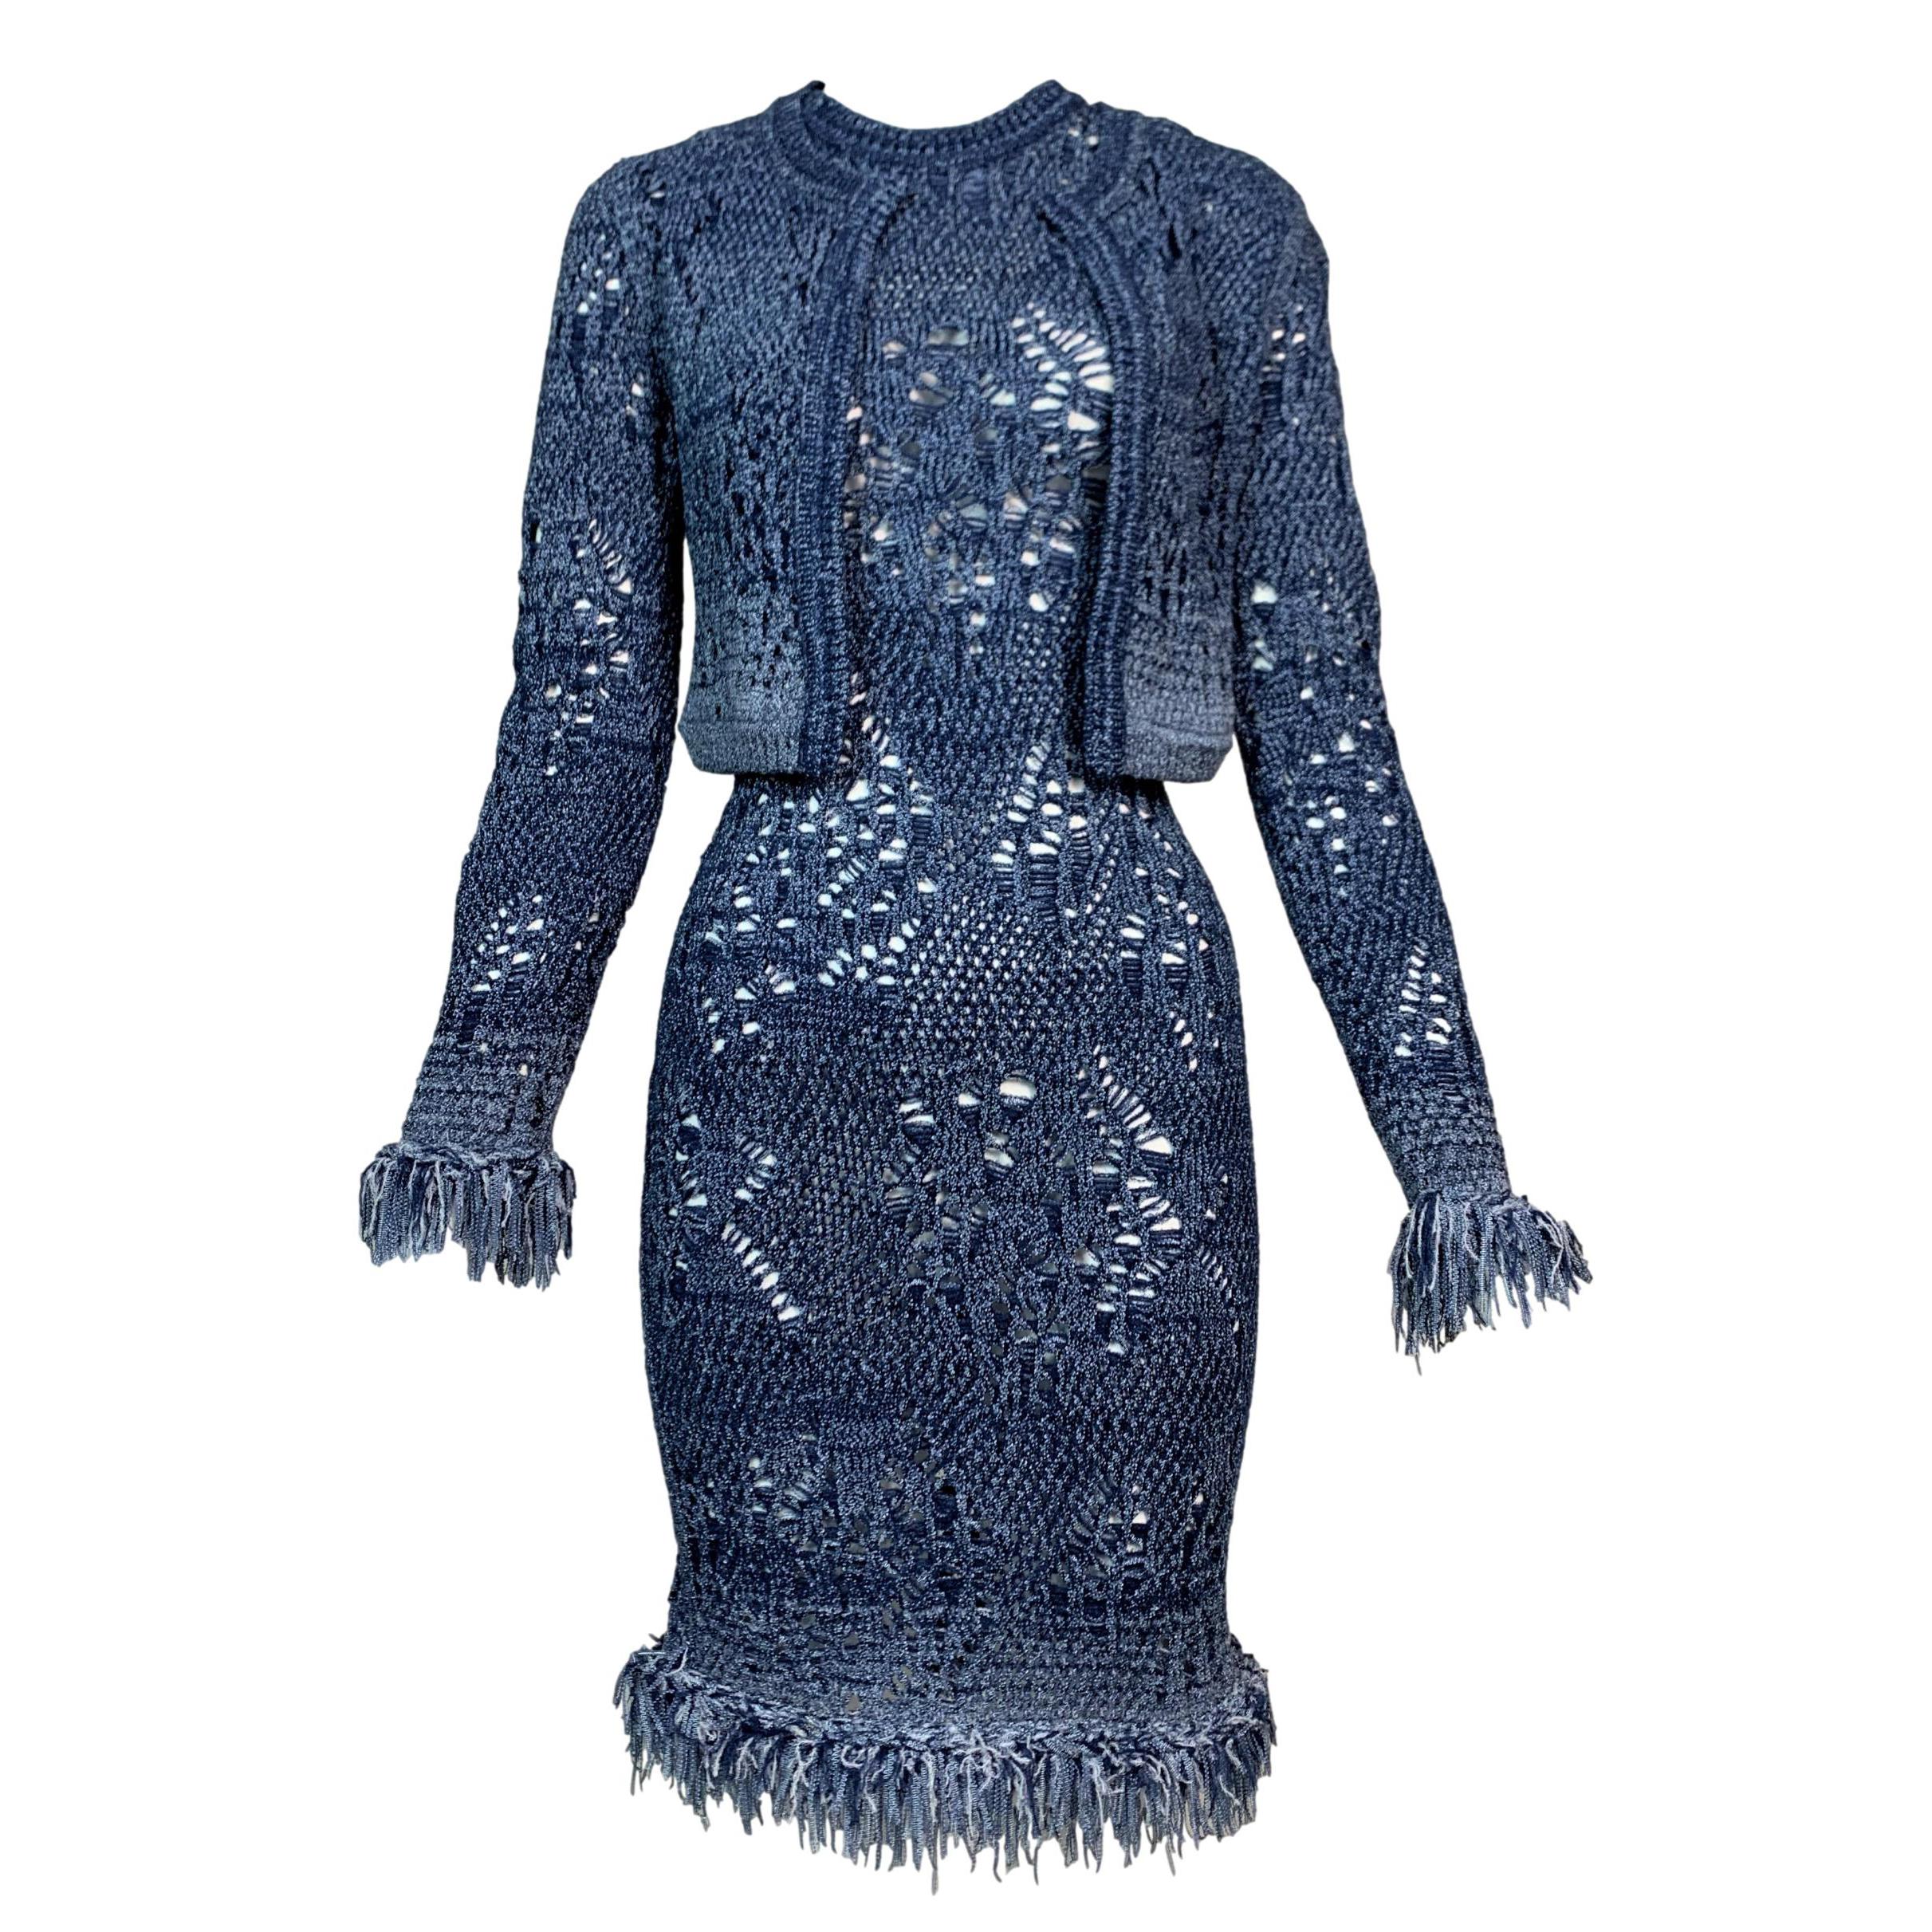 S/S 2000 Christian Dior John Galliano Runway Sheer Blue Knit Dress & Jacket